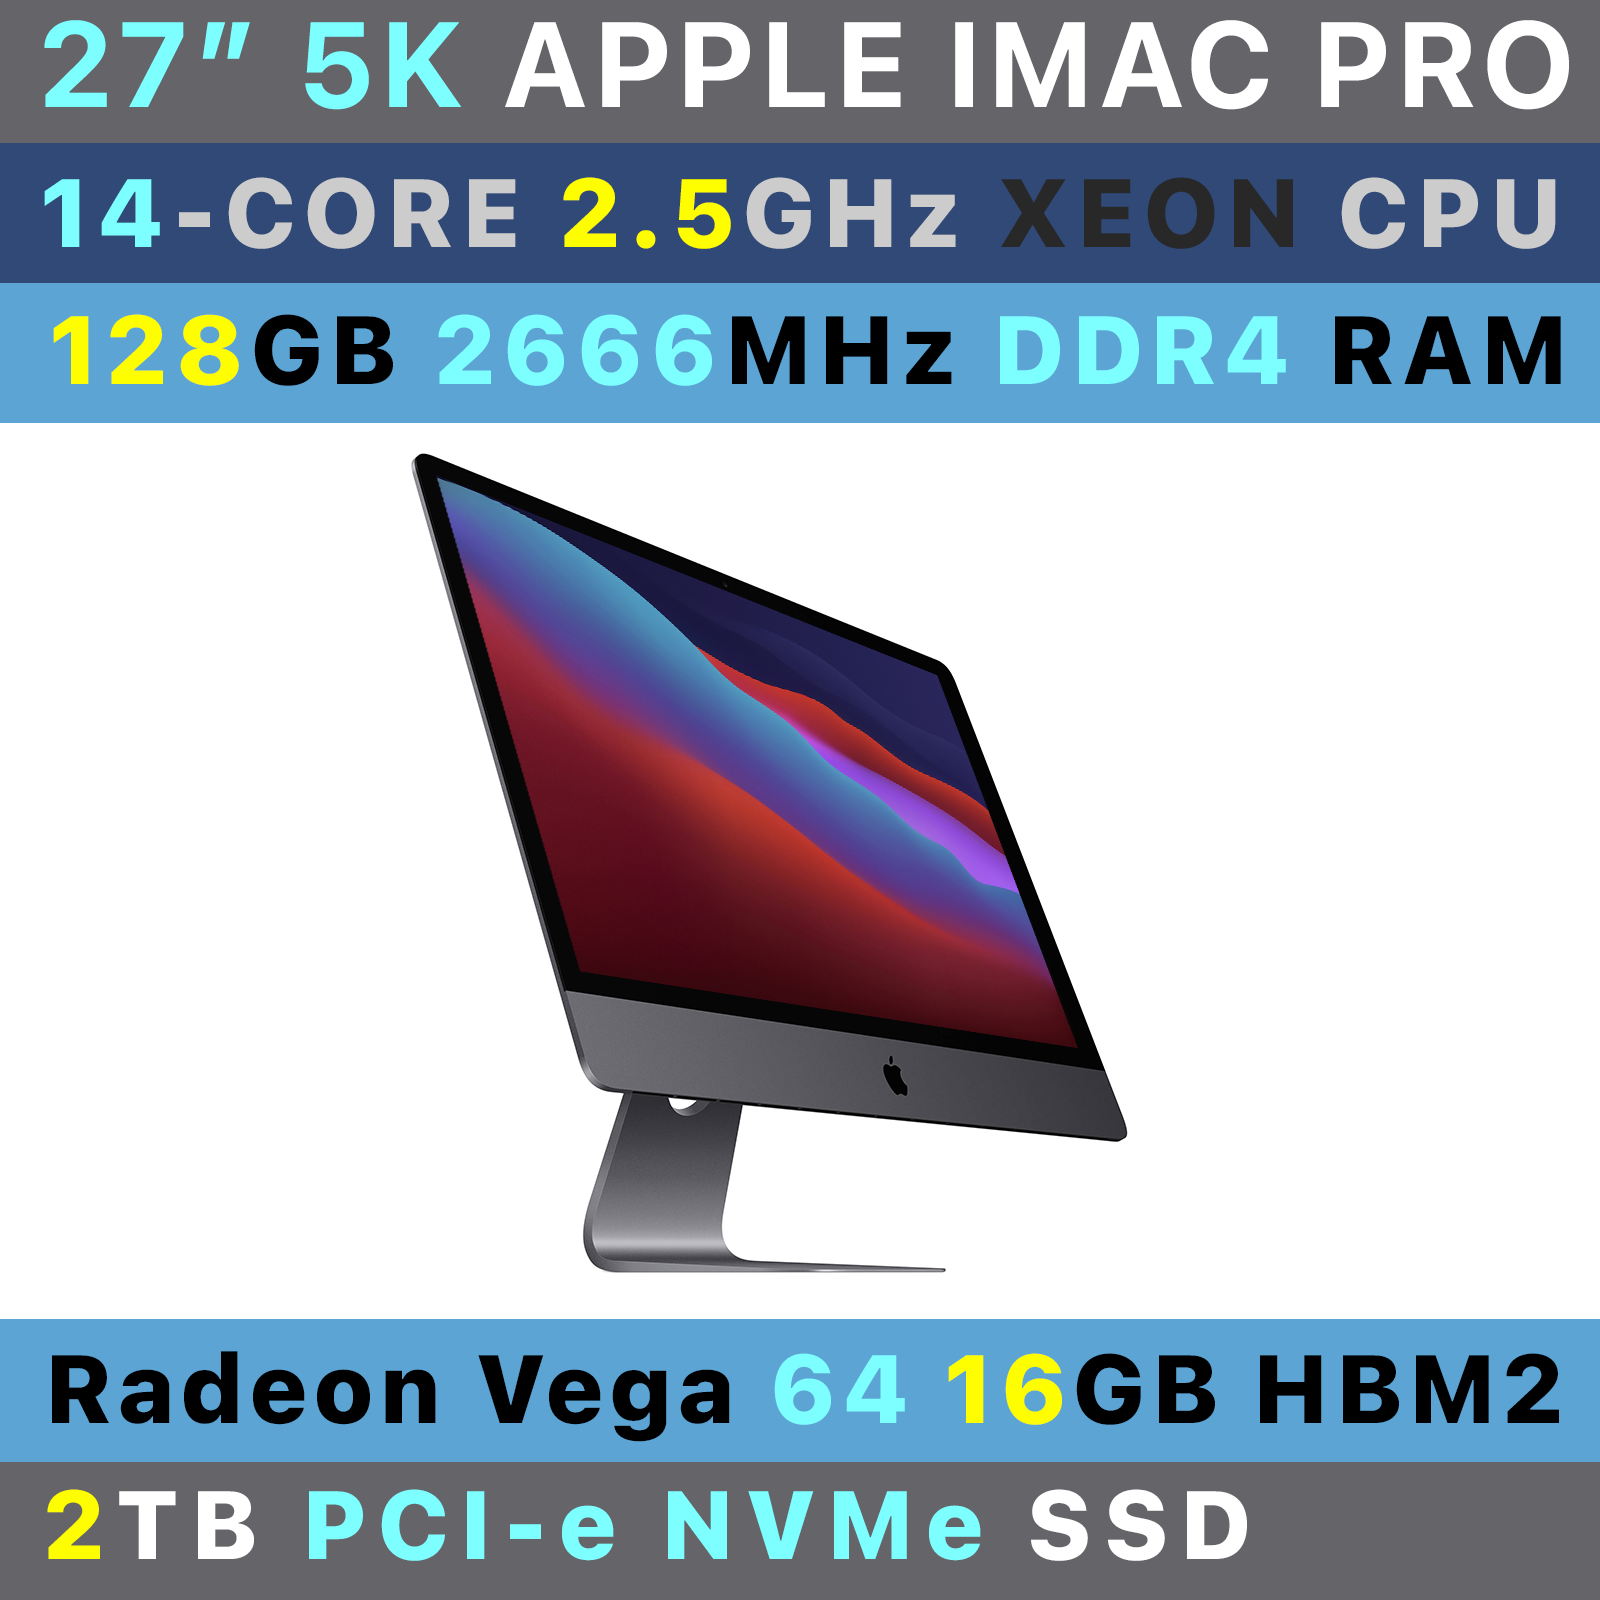 Apple iMac Pro ・ 14-core 2.5GHz ・ 128GB RAM ・ 2TB SSD ・ Vega 64 16GB